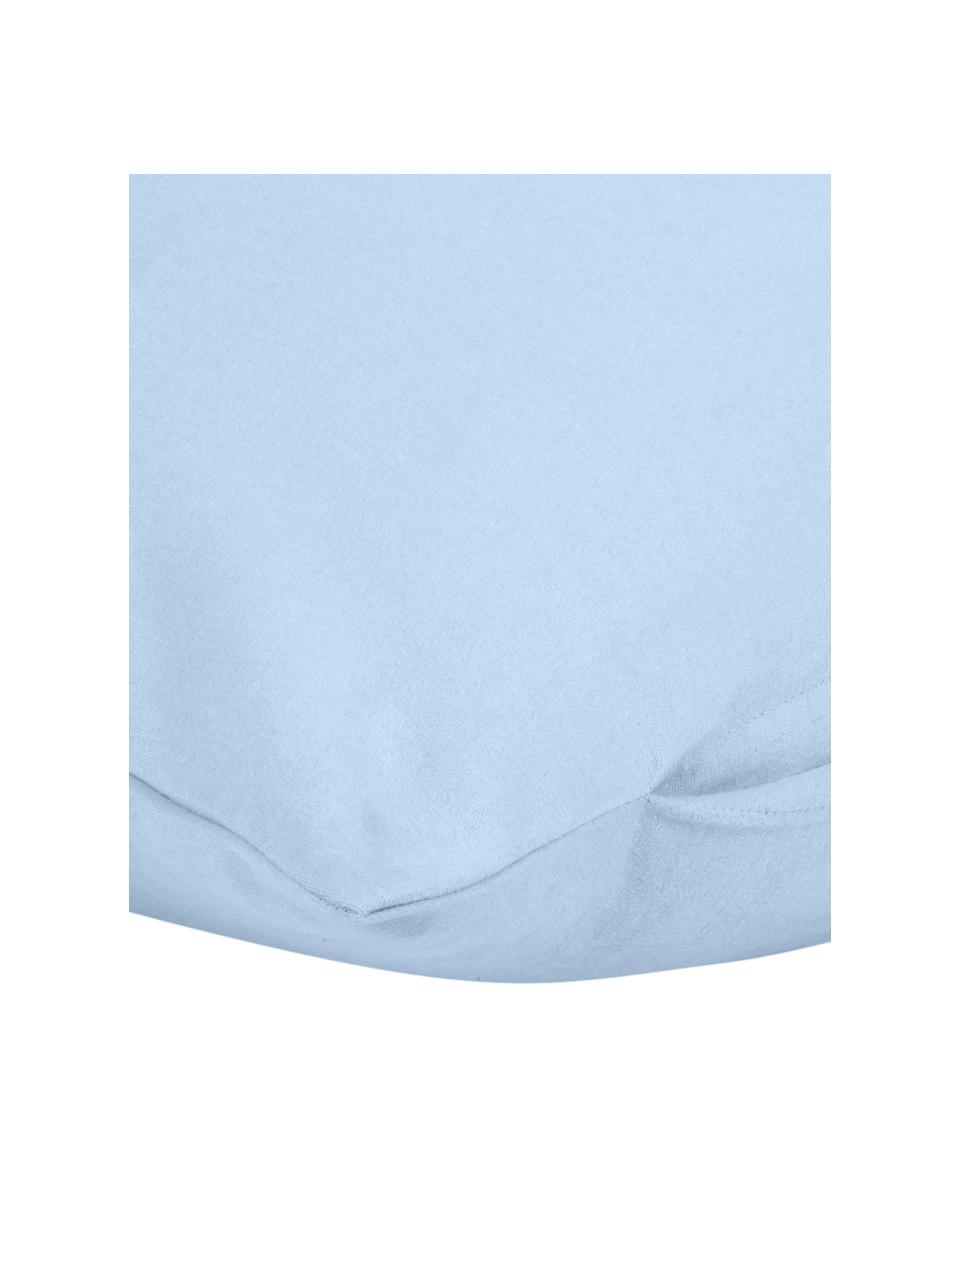 Flanell-Kissenbezüge Biba in Hellblau, 2 Stück, Webart: Flanell Flanell ist ein k, Hellblau, 40 x 80 cm